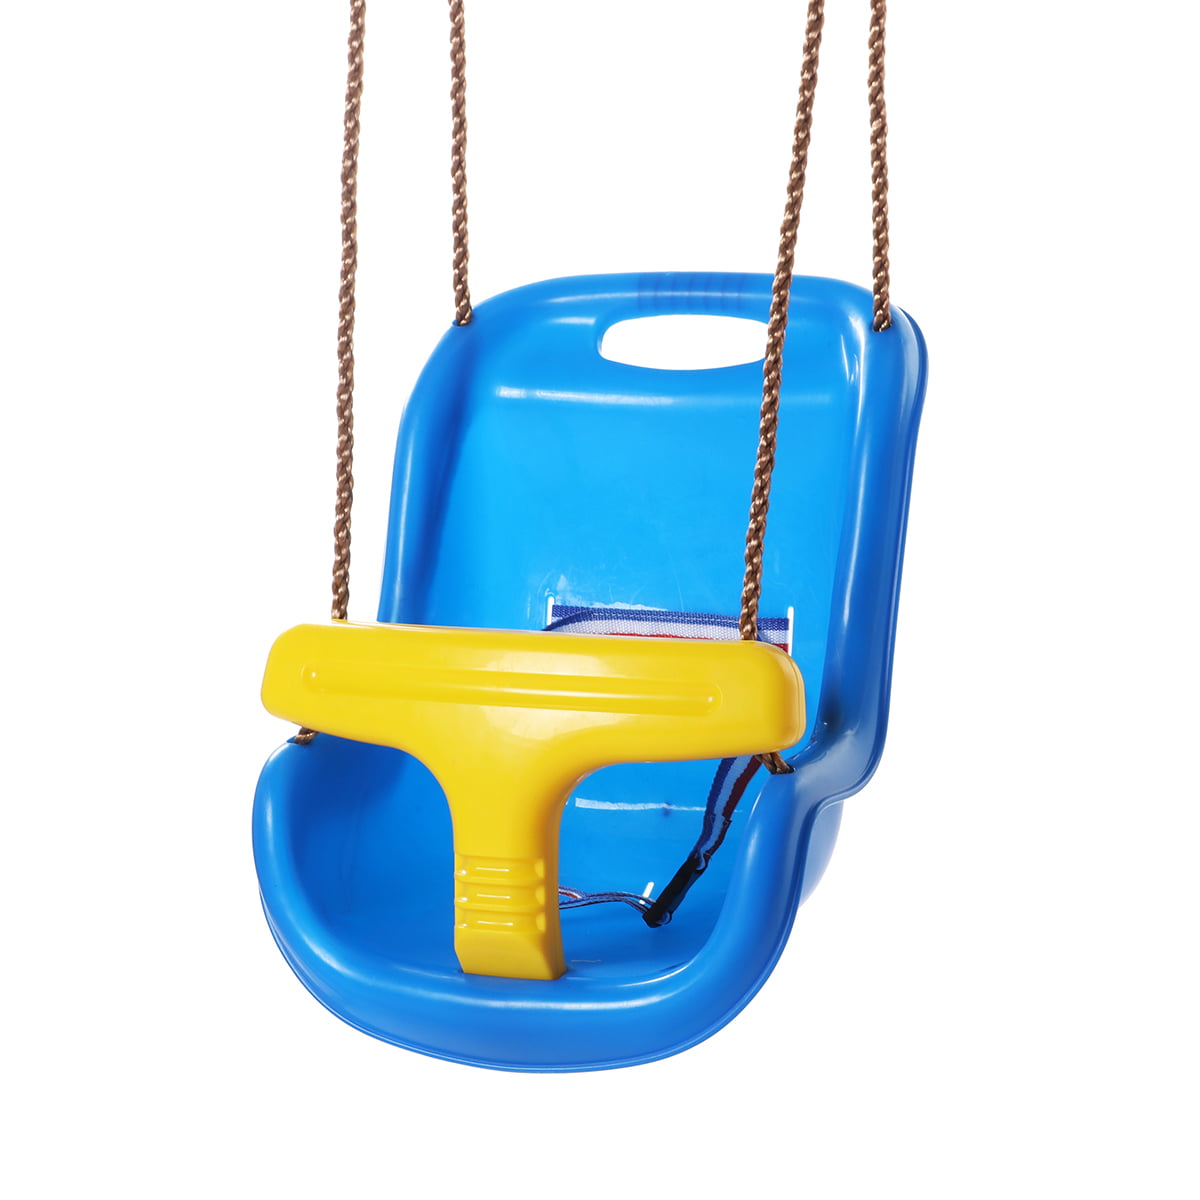 Outdoor Hanging Infants Baby Swing Chair Seat 2-in-1 Snug 'n Toddler Swing Blue 